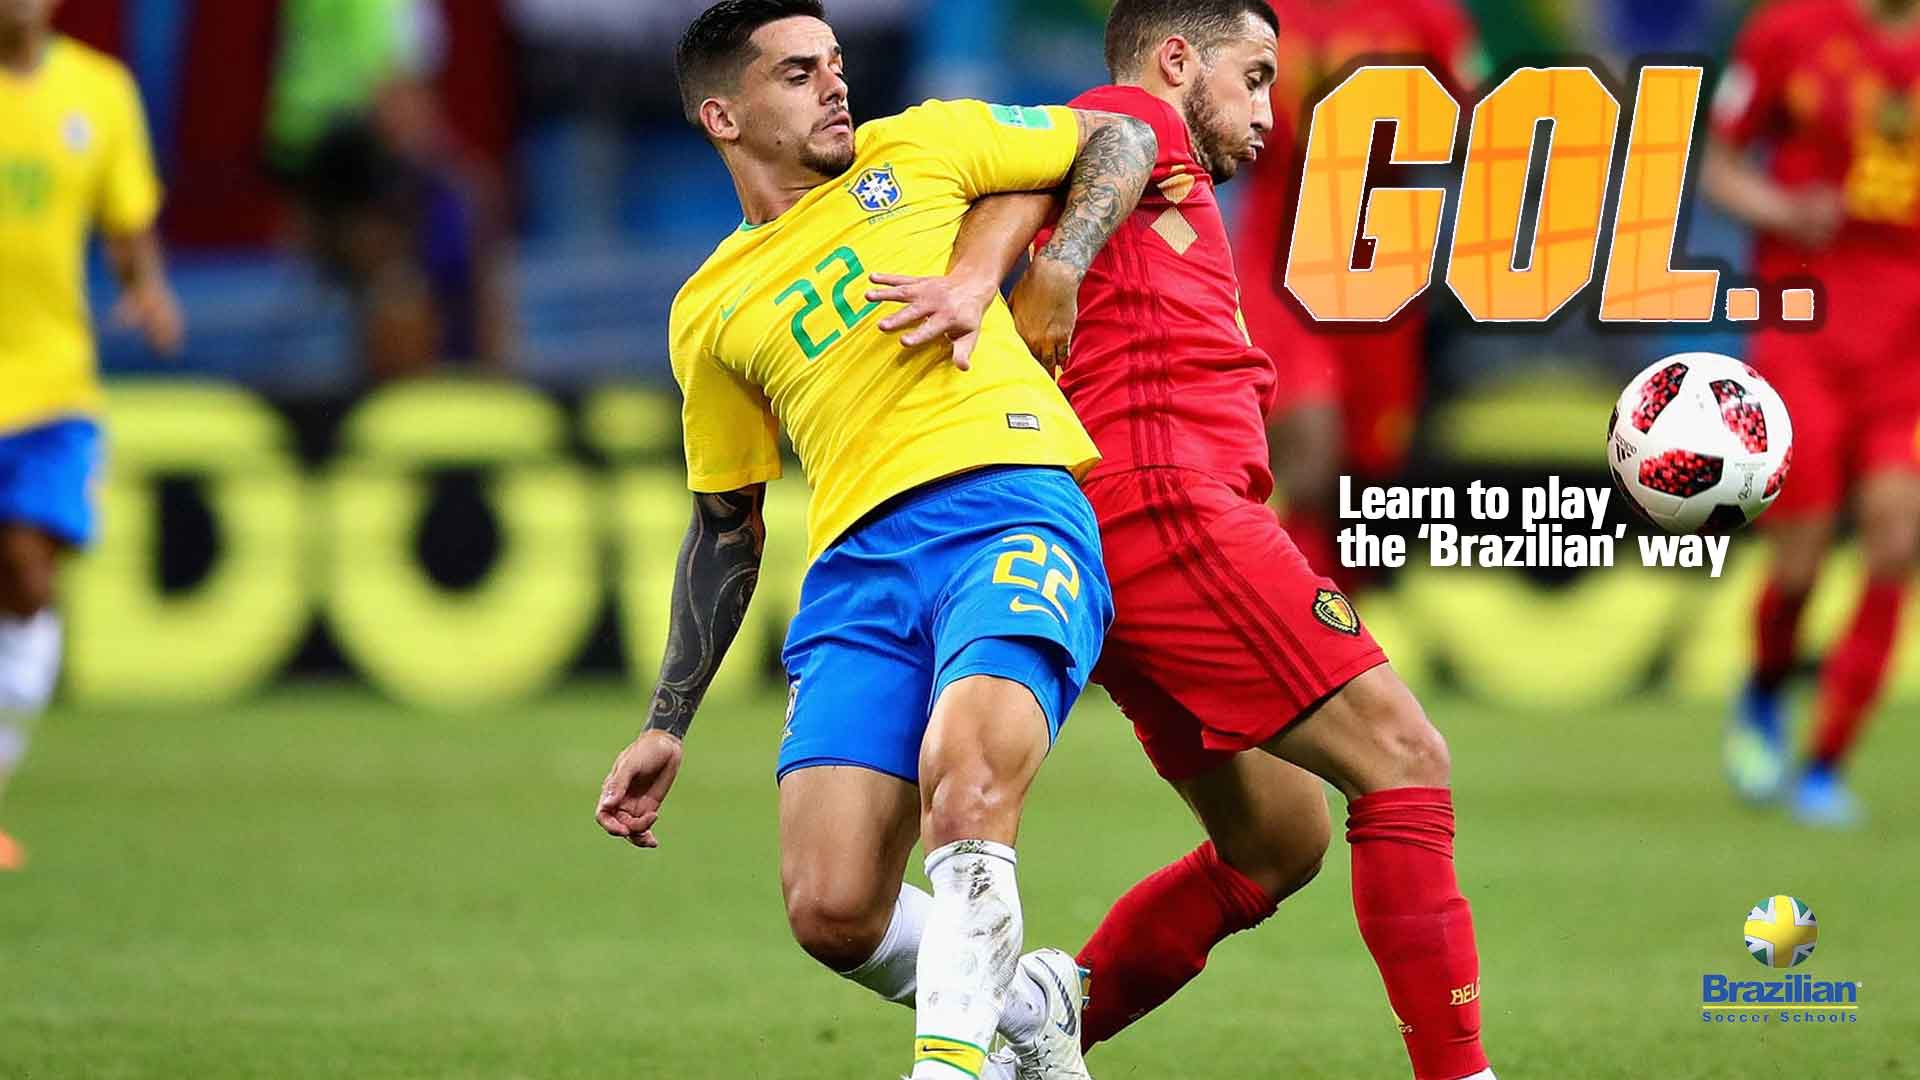 GOL! The Brazilian Soccer Schools Programme